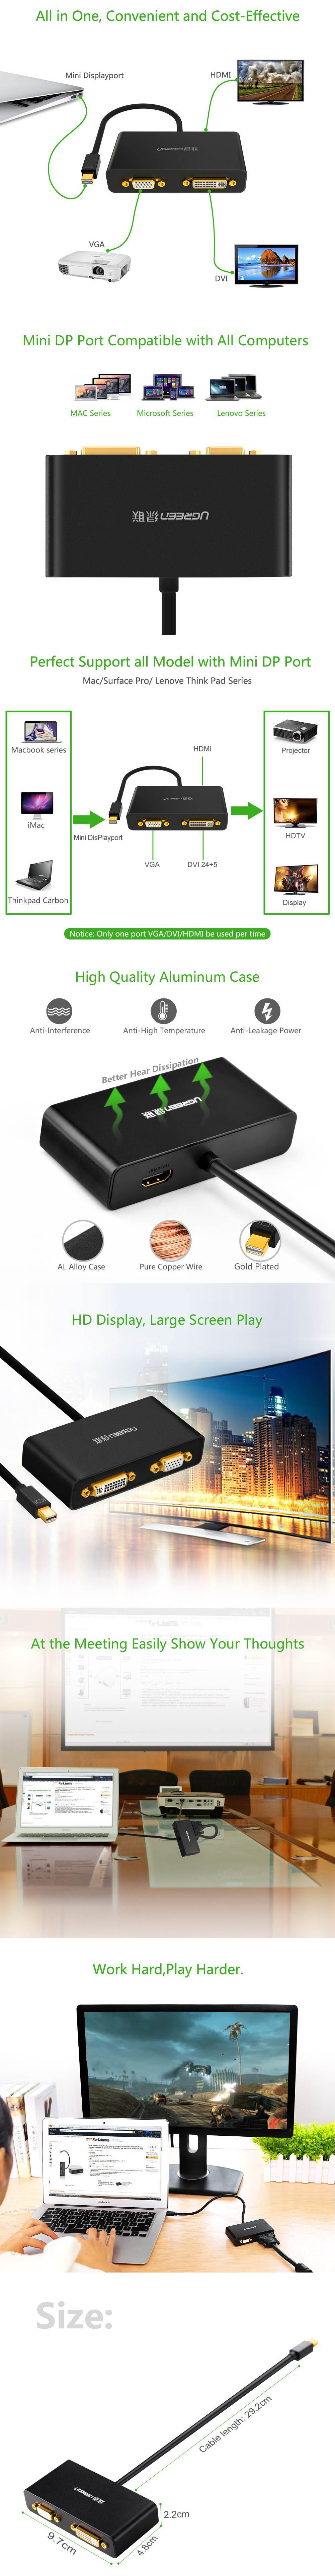 DisplayPort-Cables-UGreen-3-in-1-Mini-Display-Port-to-HDMI-VGA-DVI-Converter-Black-1